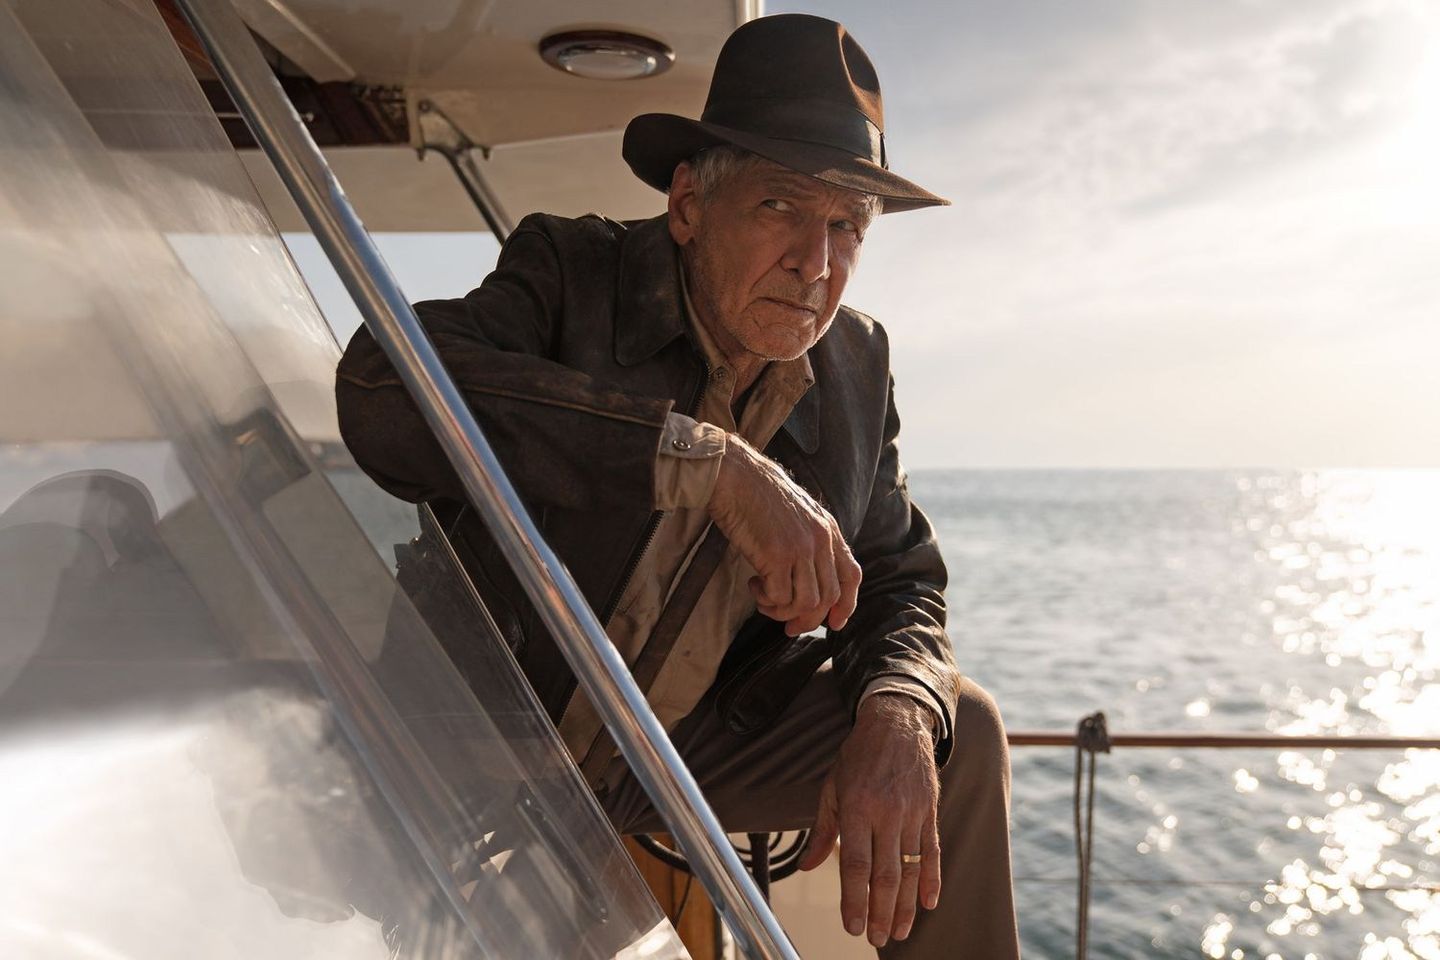 Letné kino: Indiana Jones a Nástroj osudu